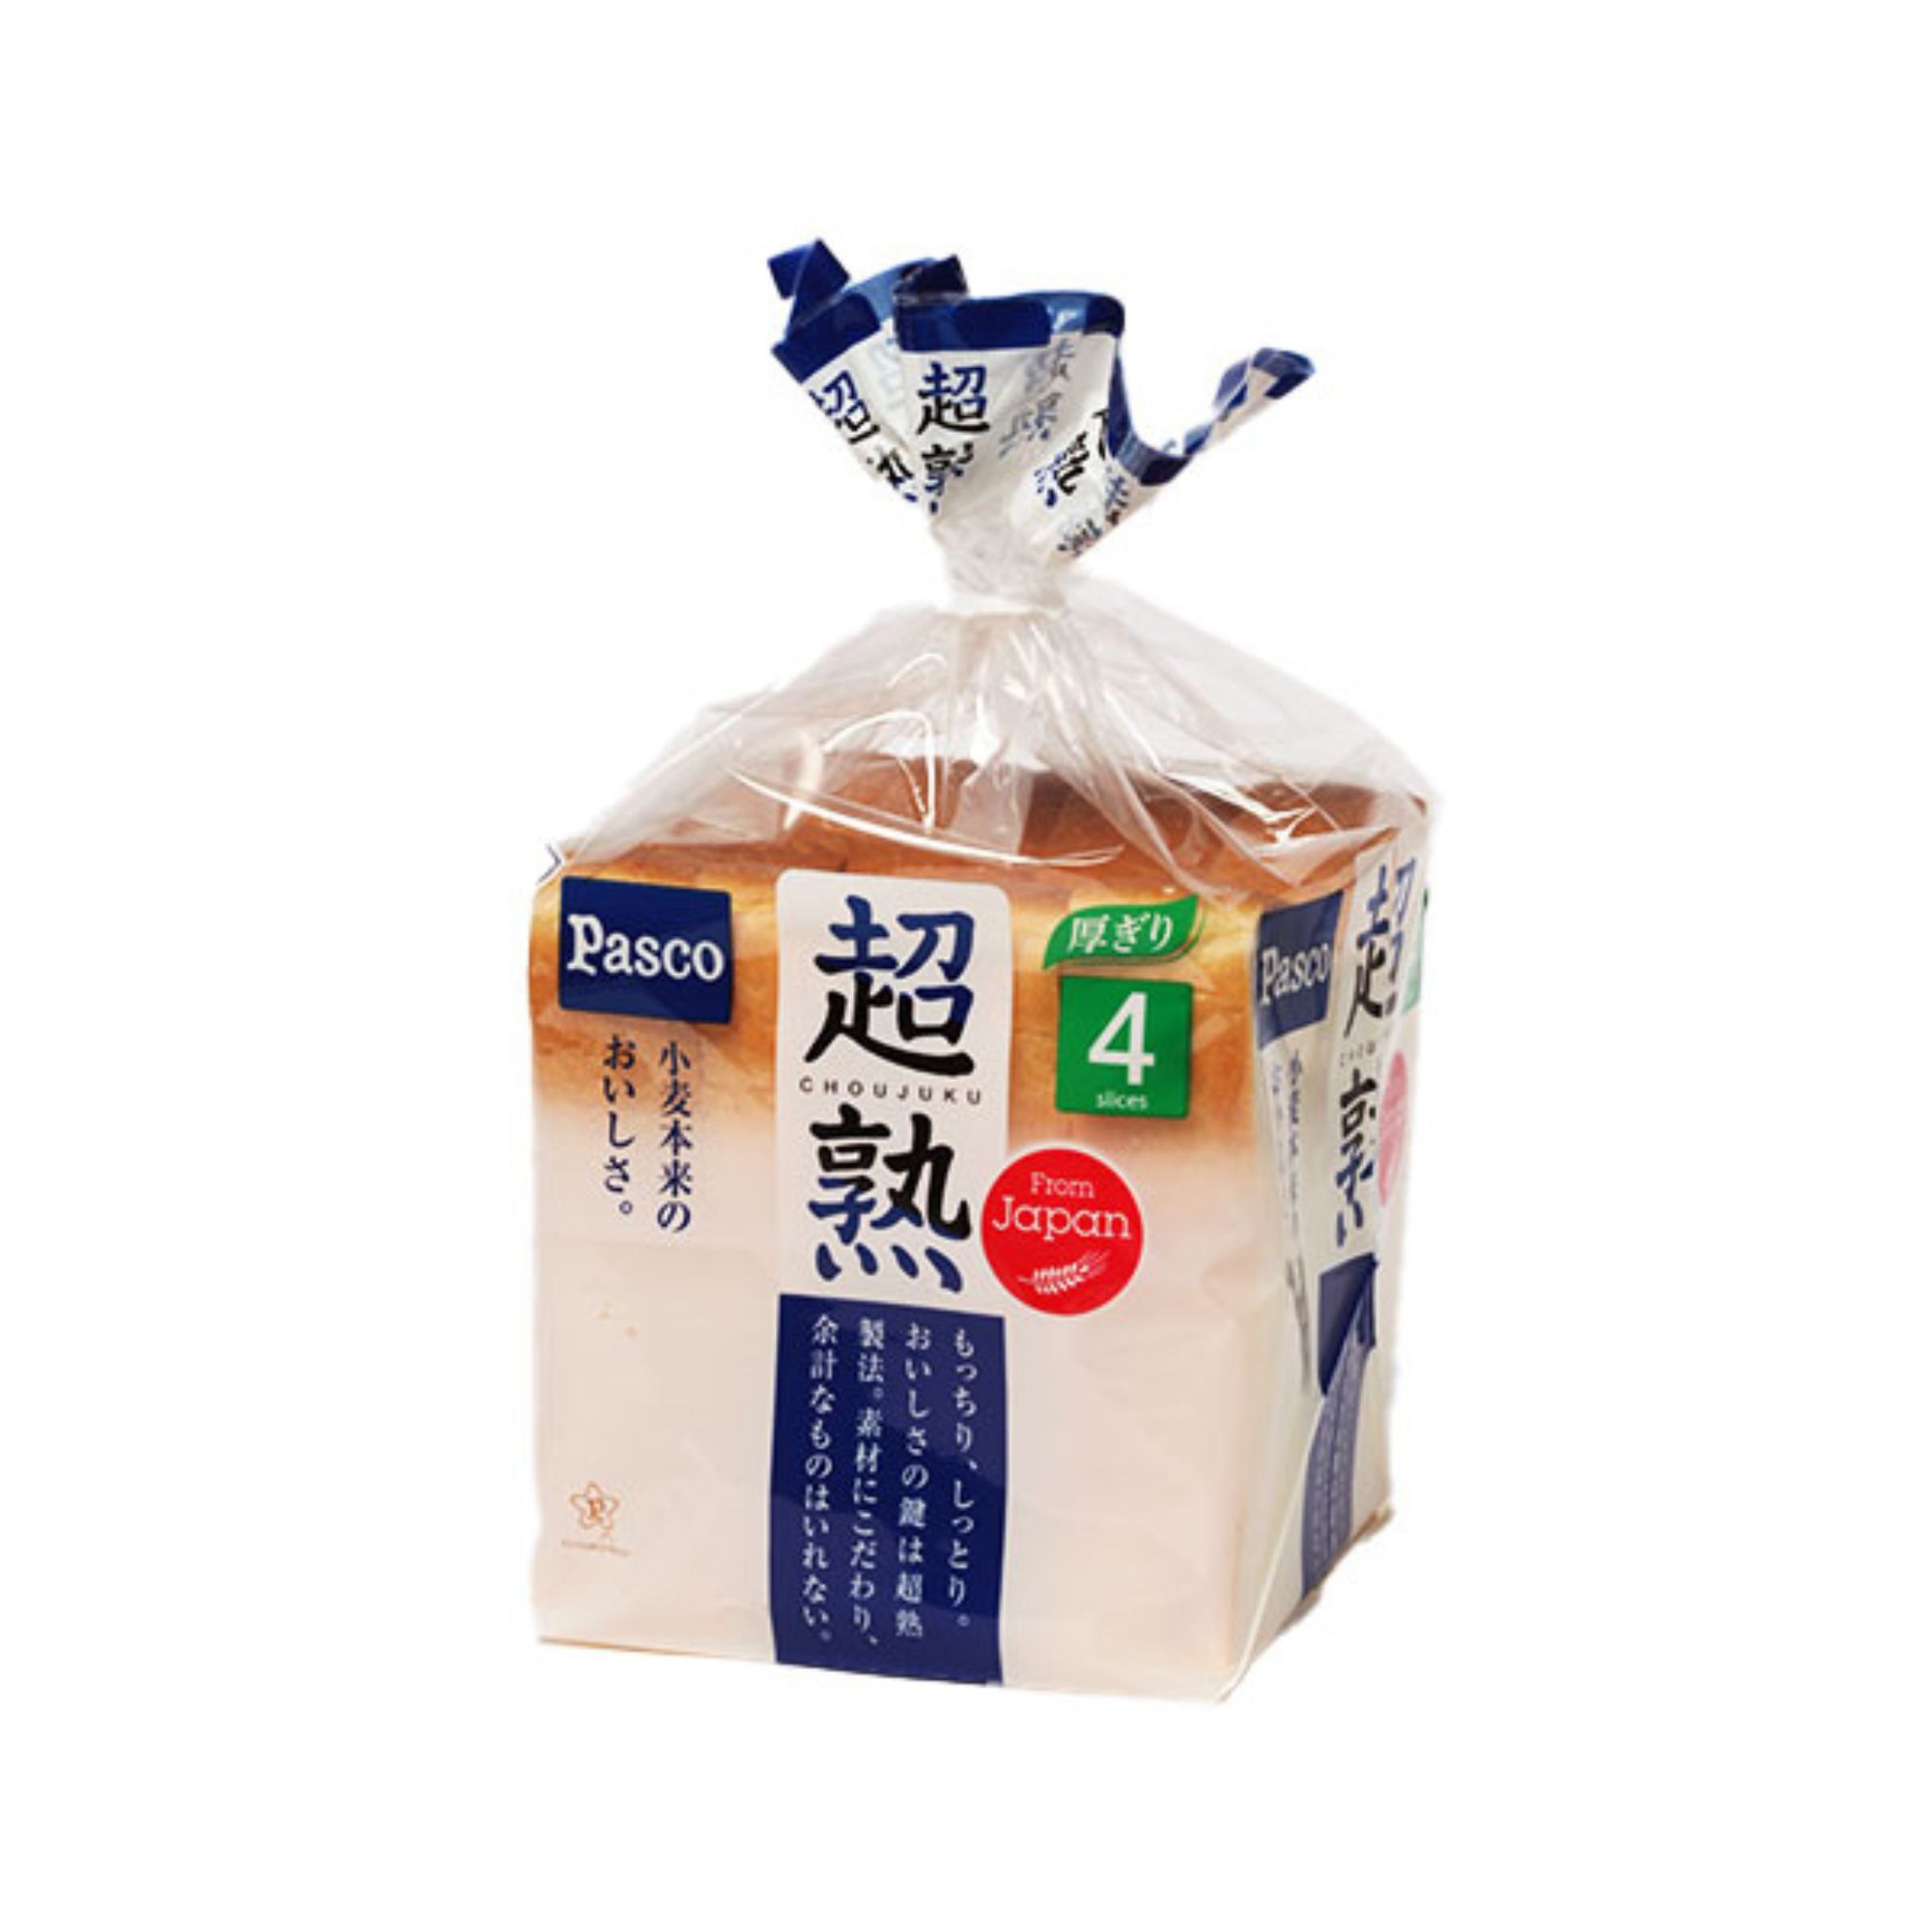 Pasco Choujuku White Bread Japan 4 Slices